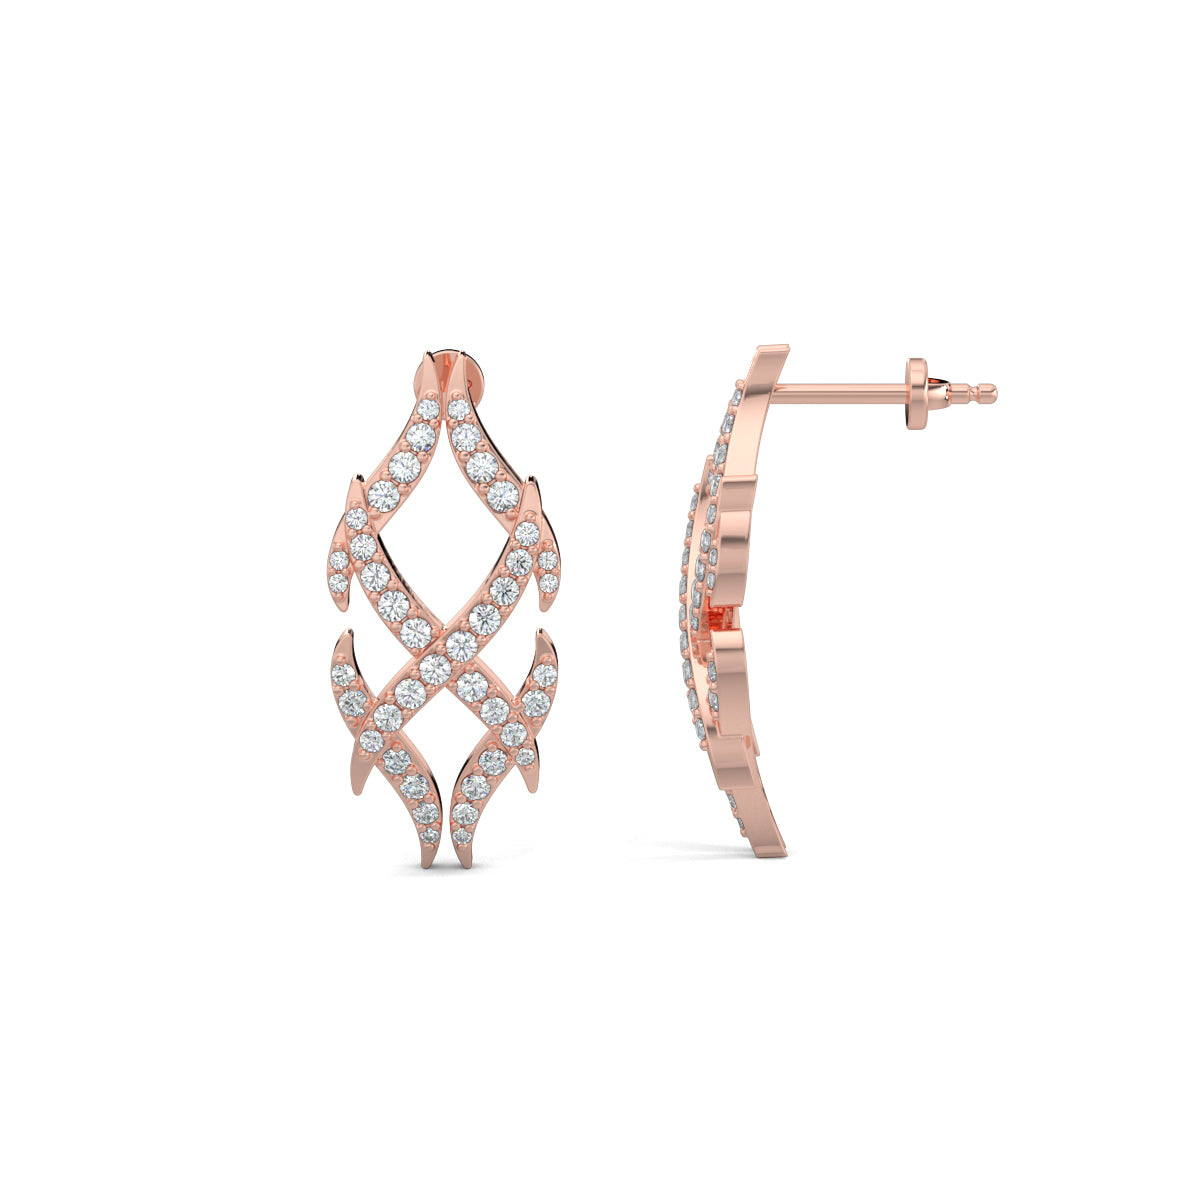 Rose Gold, Diamond Earrings, Italian-inspired diamond earrings, mid-length earrings, natural diamonds, lab-grown diamonds, Bella Luce Earrings, elegant jewelry, sophisticated earrings, Italian design inspired earrings.